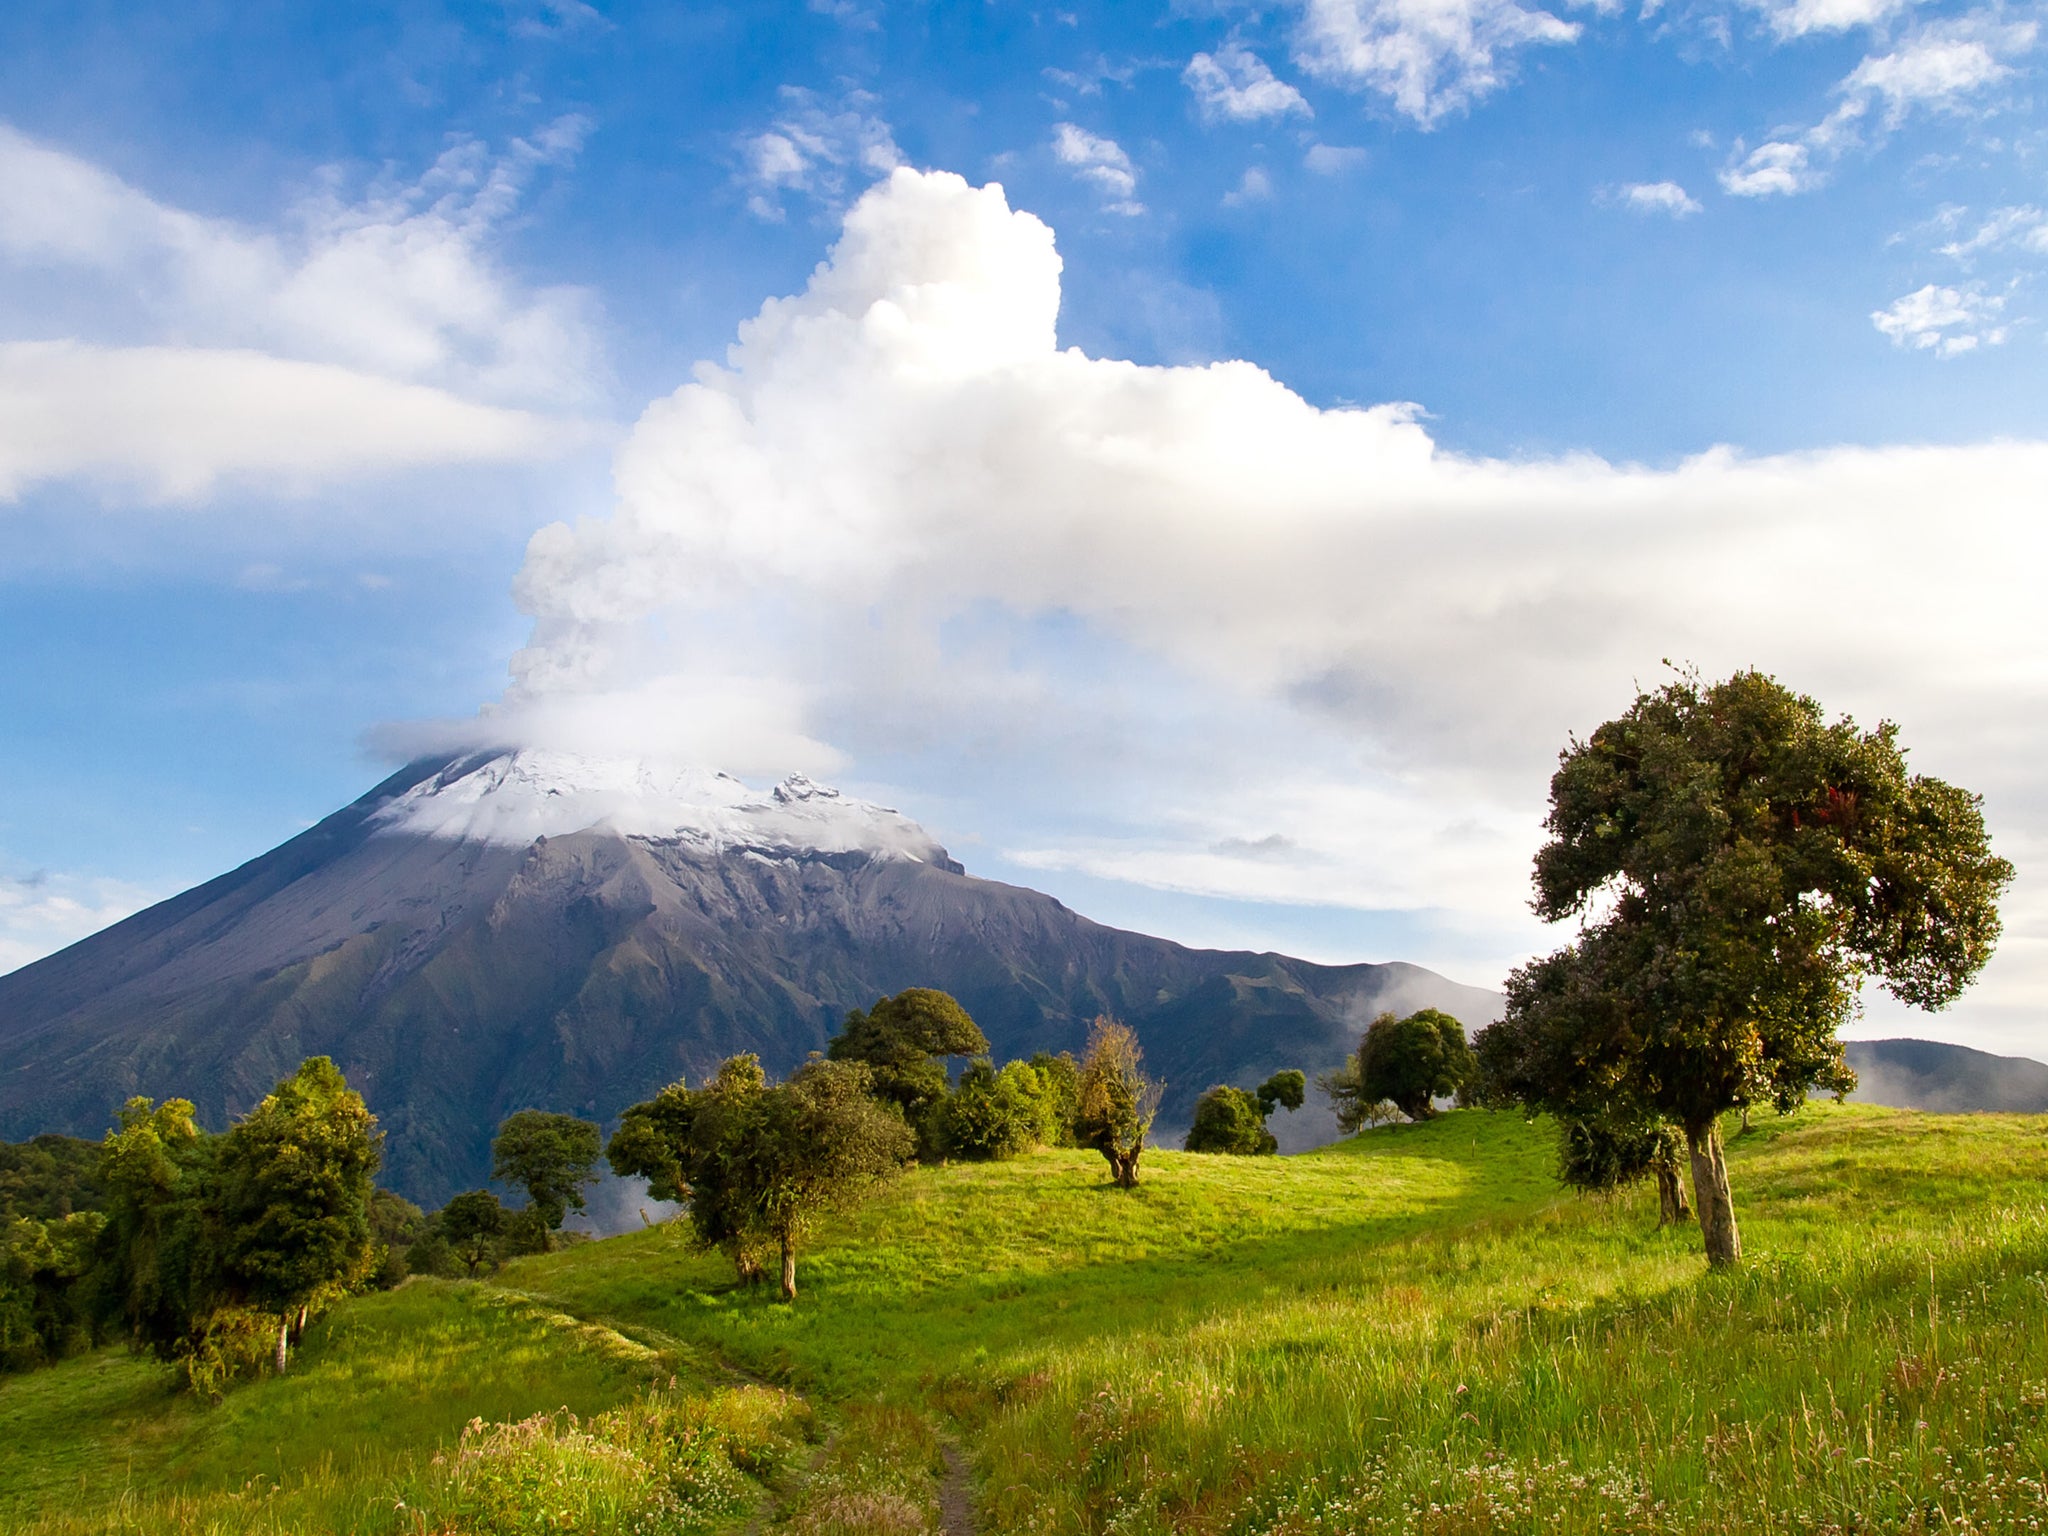 Hot stuff: the active Tungurahua volcano dominates the skyline